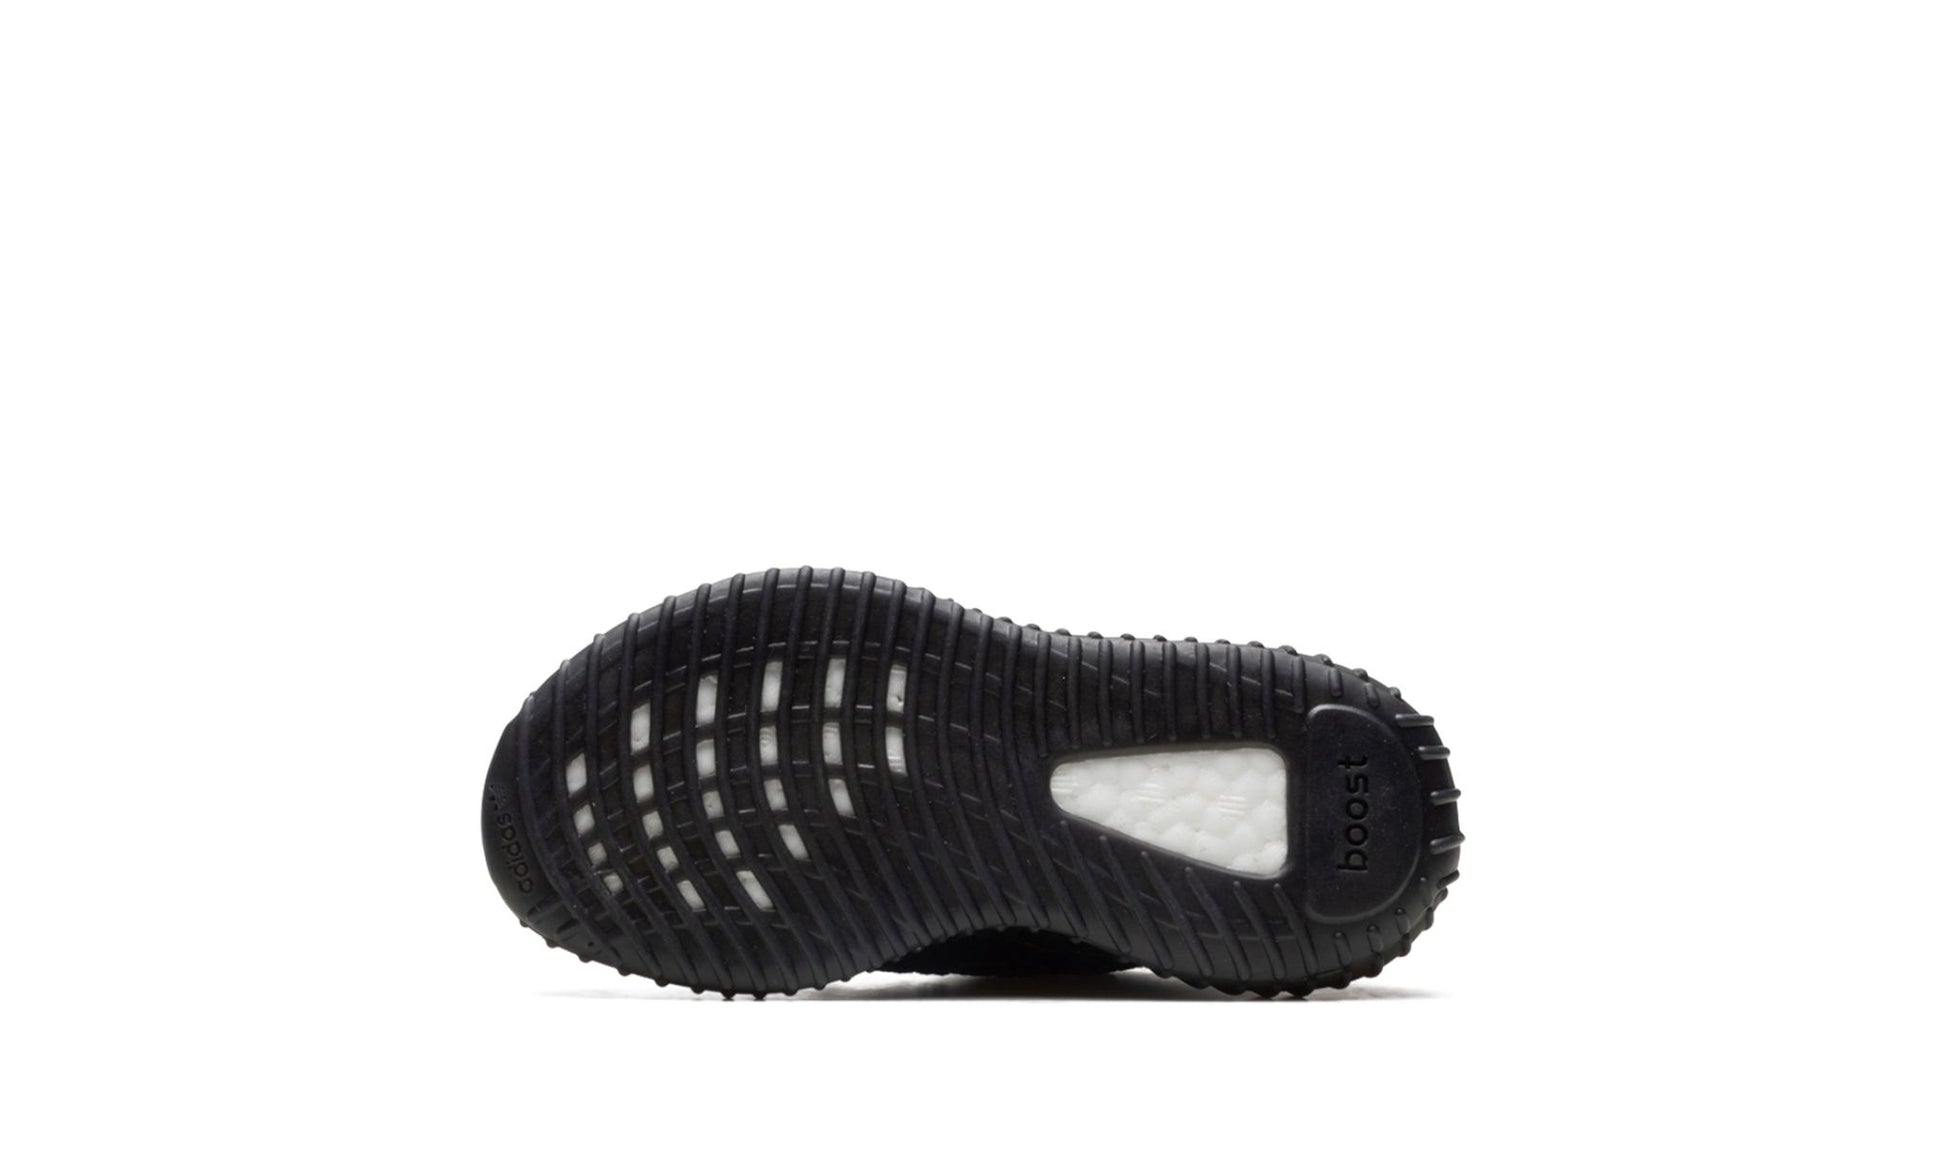 Adidas Yeezy Boost 350 V2 Kids 'MX Rock' sole